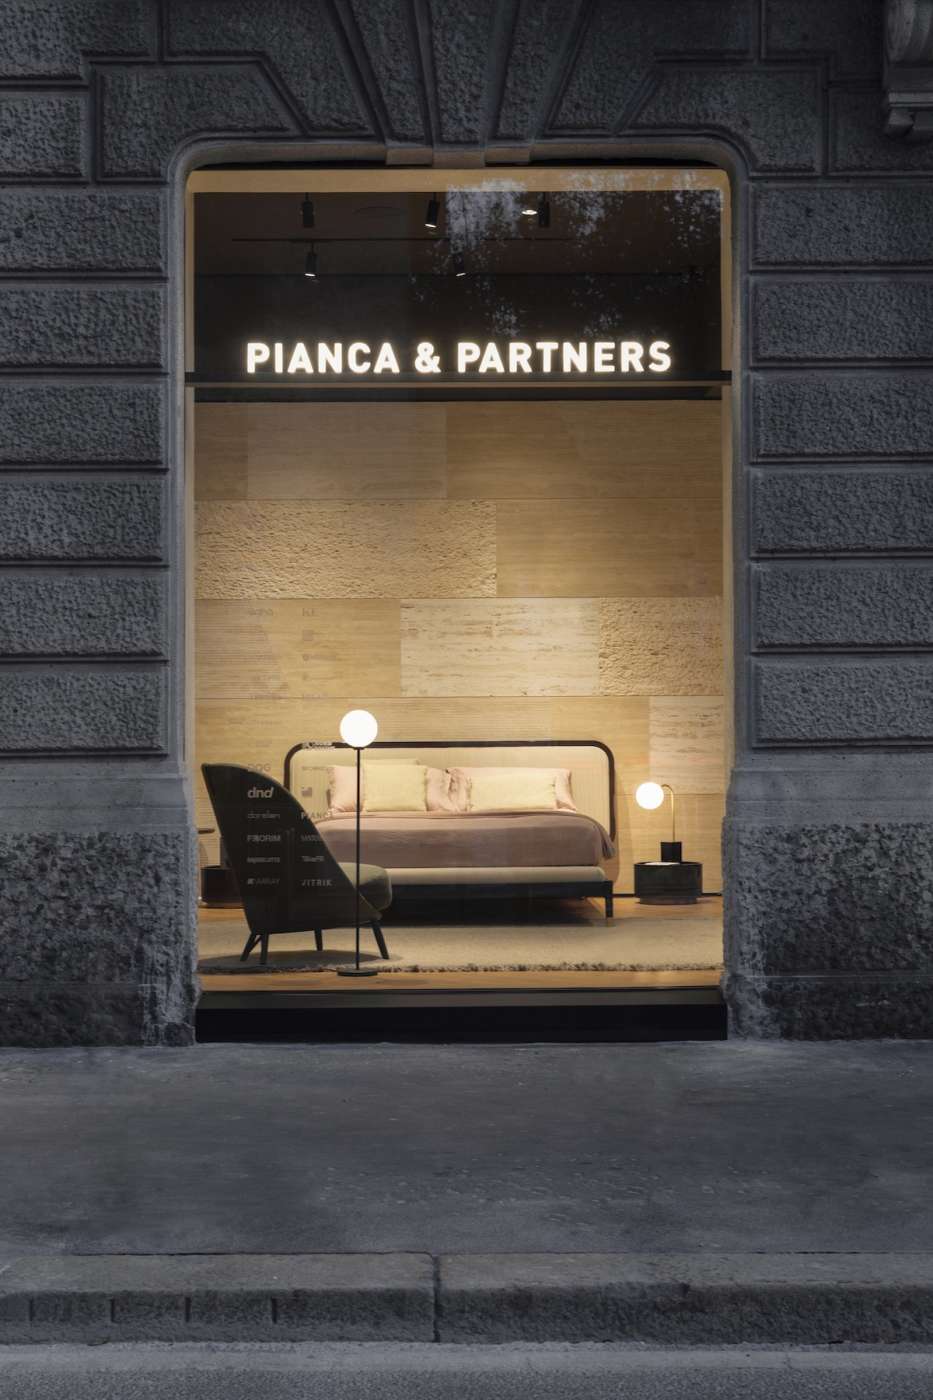 Pianca & Partners